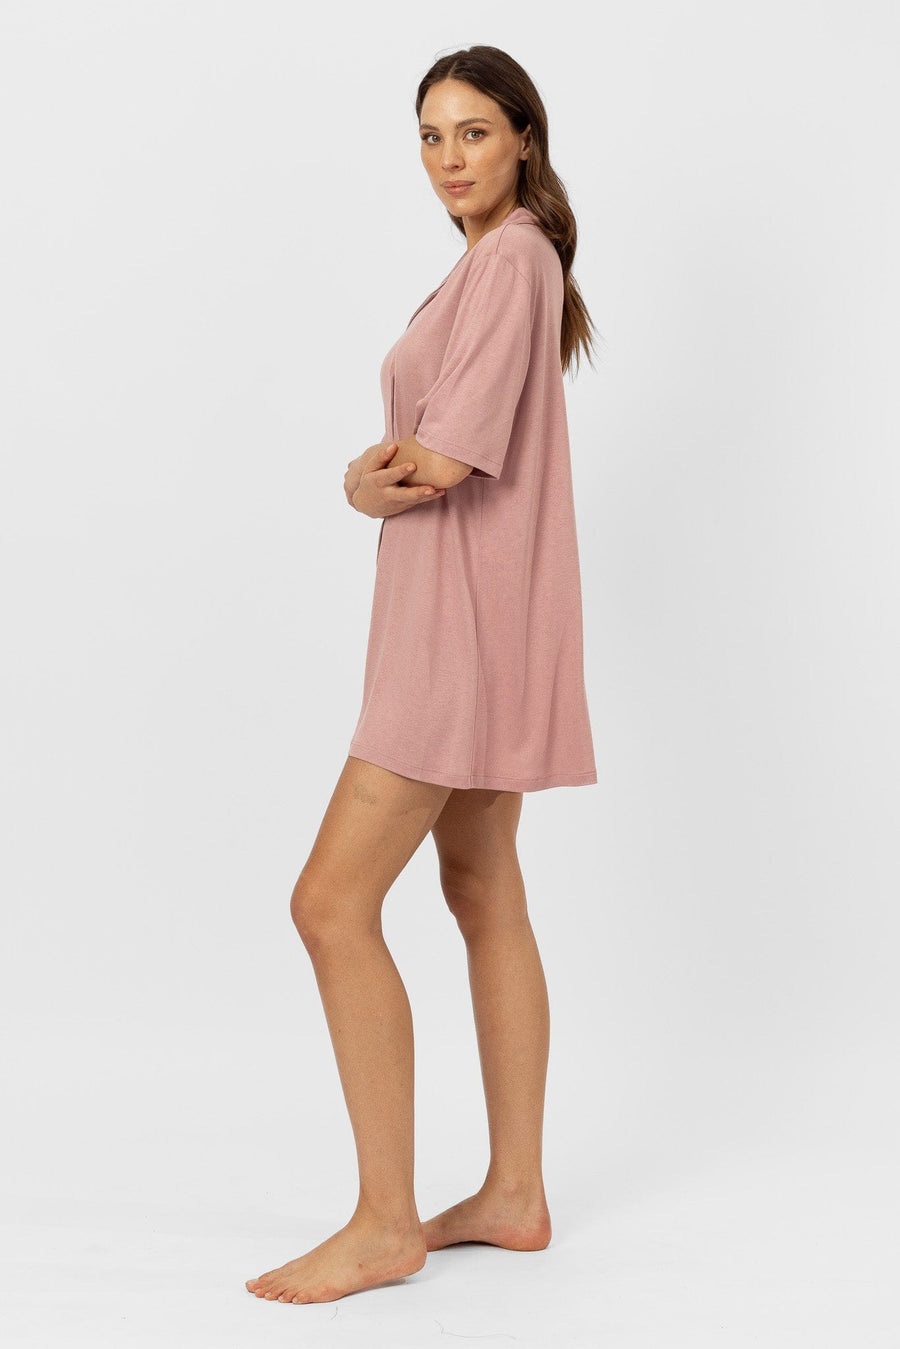 Lively Short Sleeve Dress | Blush Pink Nightgowns Australia Online | Reverie the Label  DRESSES Lively Short Sleeve Dress